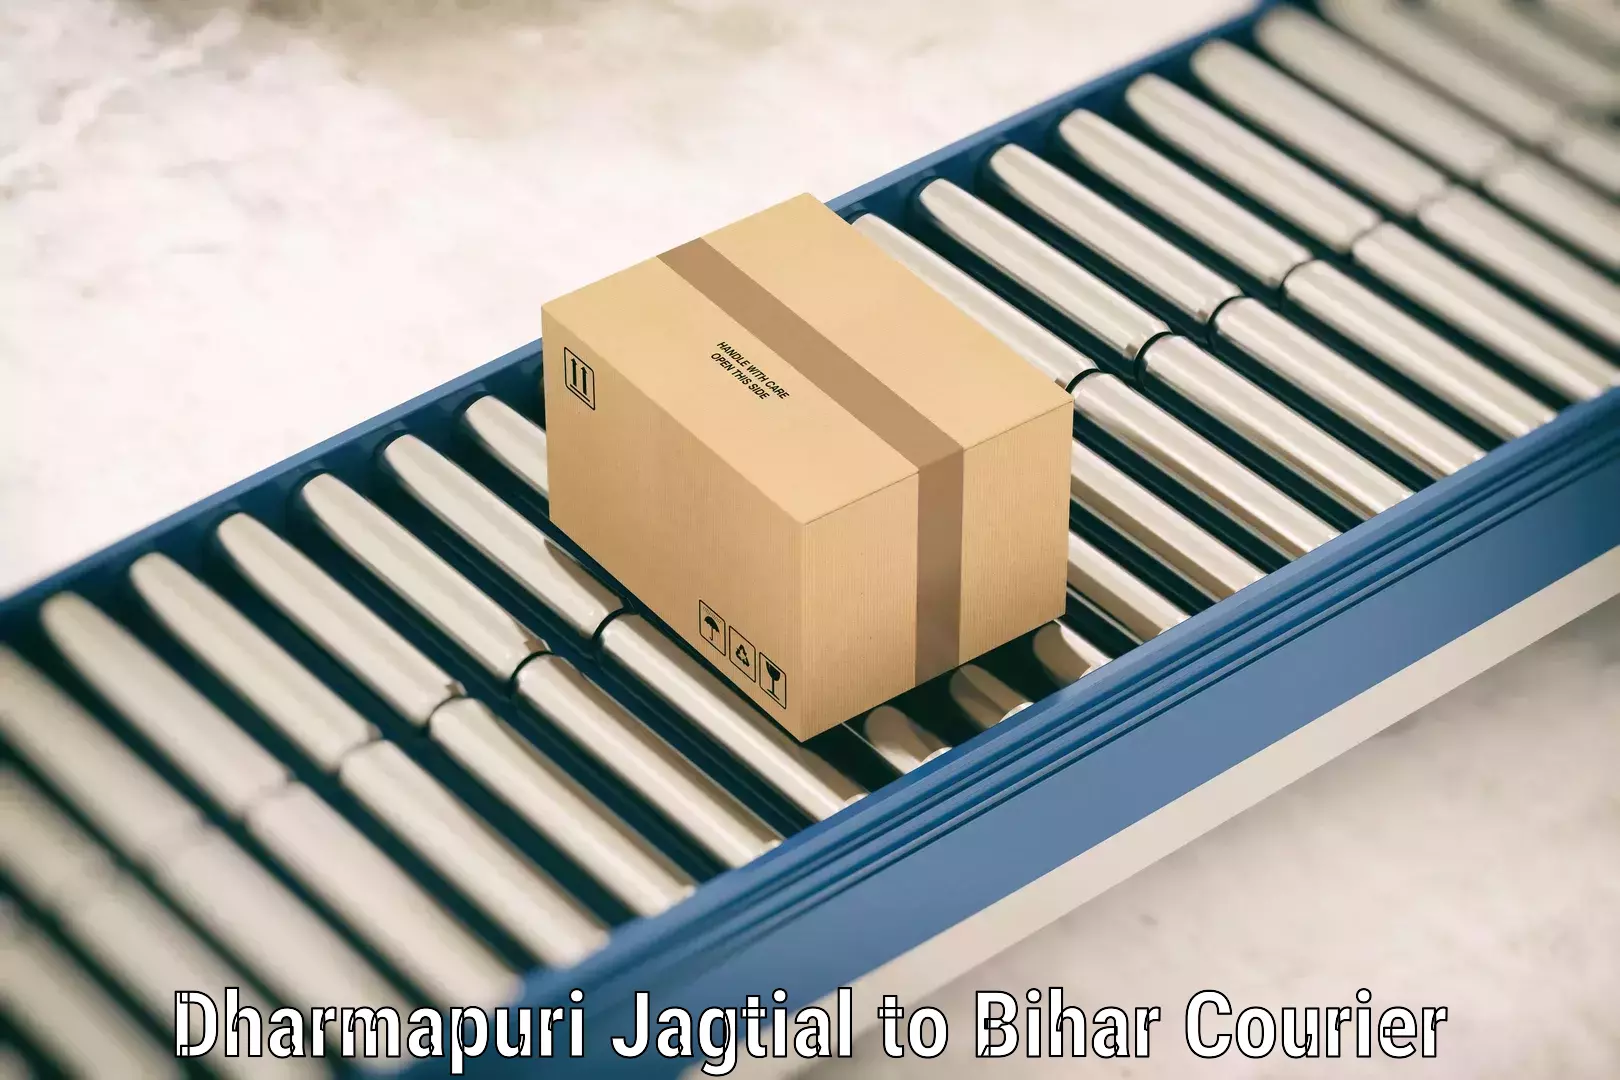 Baggage delivery technology Dharmapuri Jagtial to Bihar